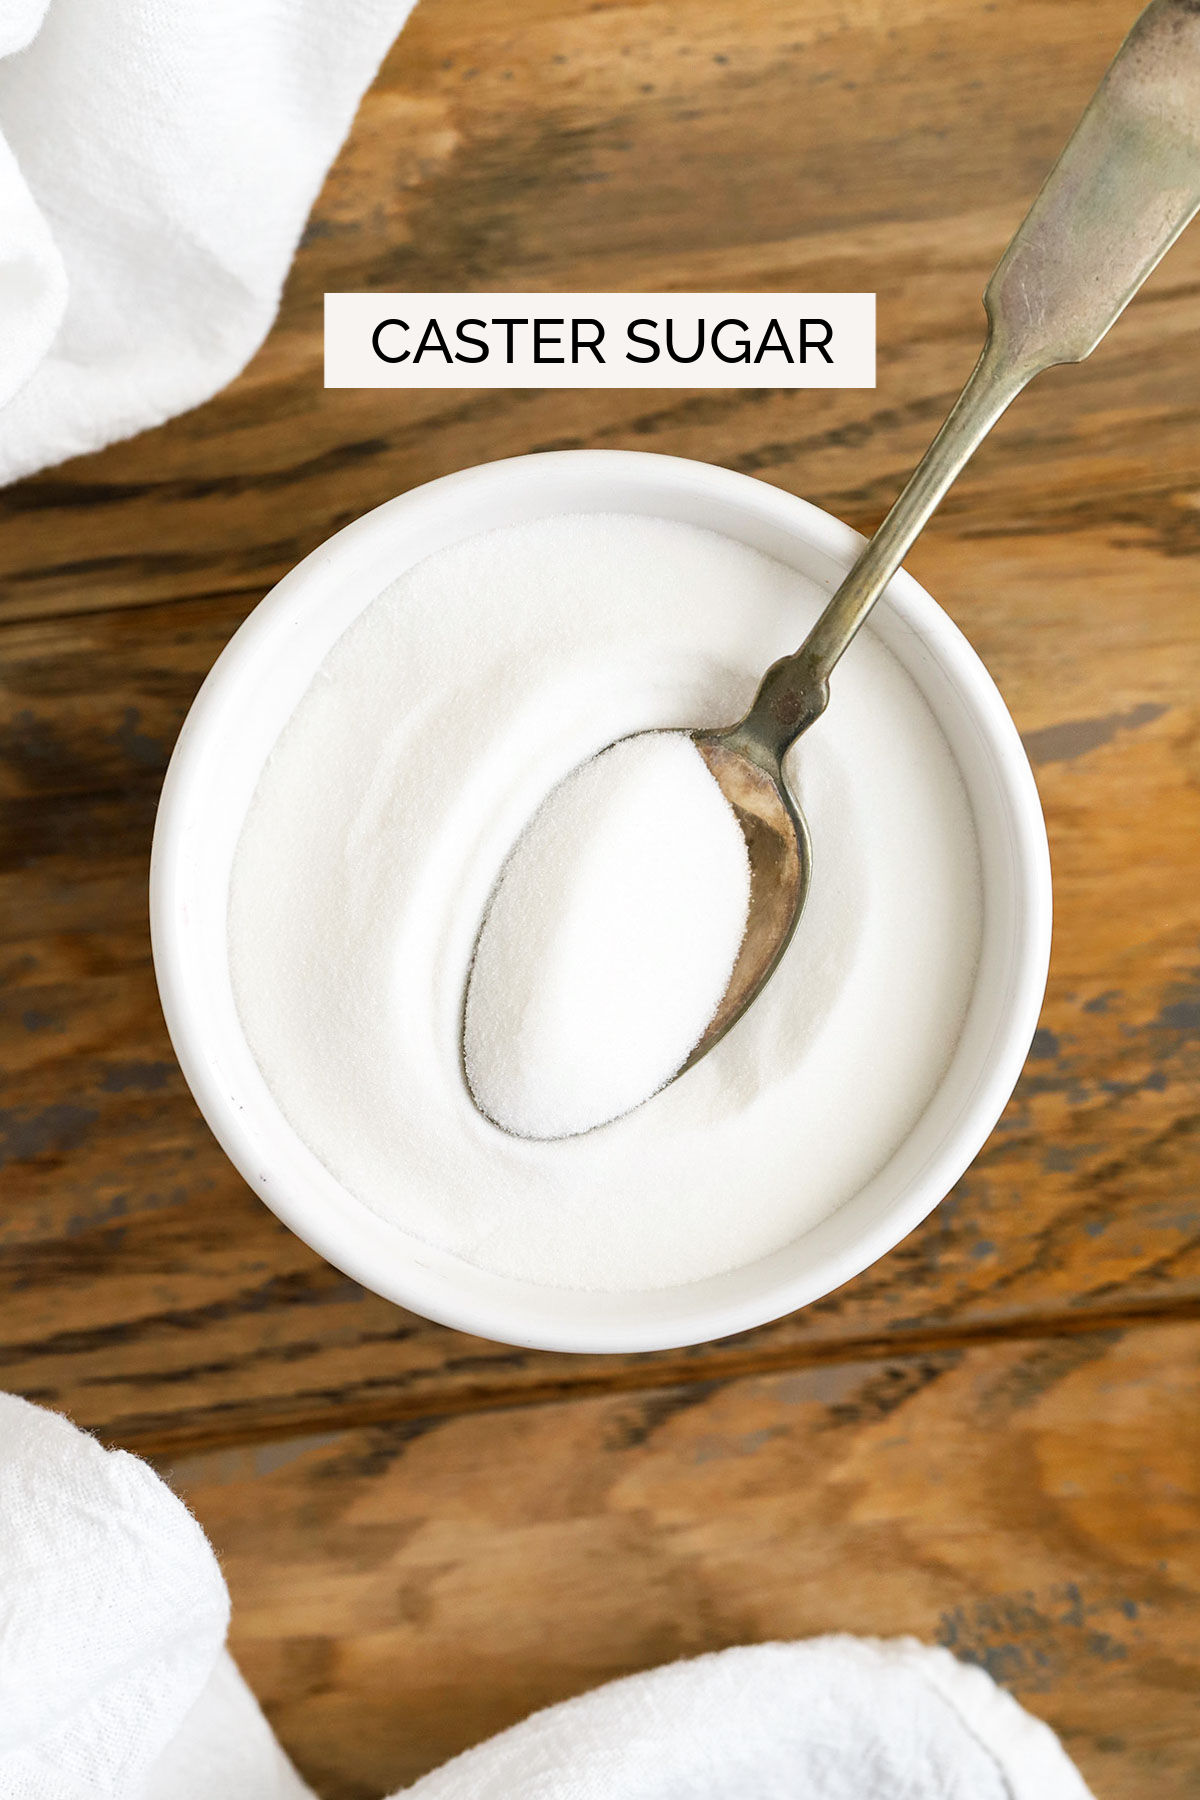 caster sugar in a white bowl